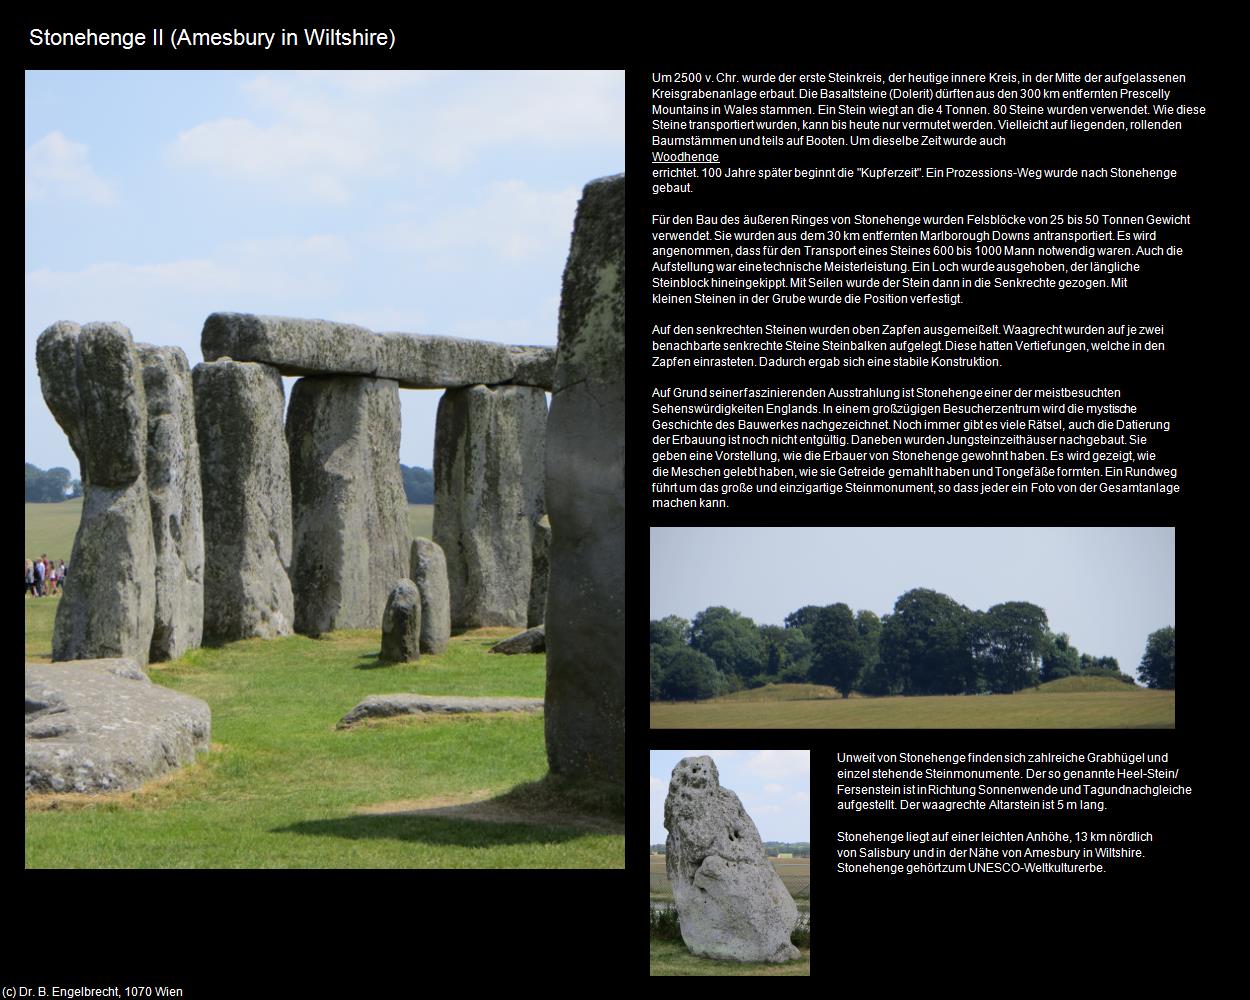 Stonehenge II (Amesbury in Wiltshire, England) in Kulturatlas-ENGLAND und WALES(c)B.Engelbrecht